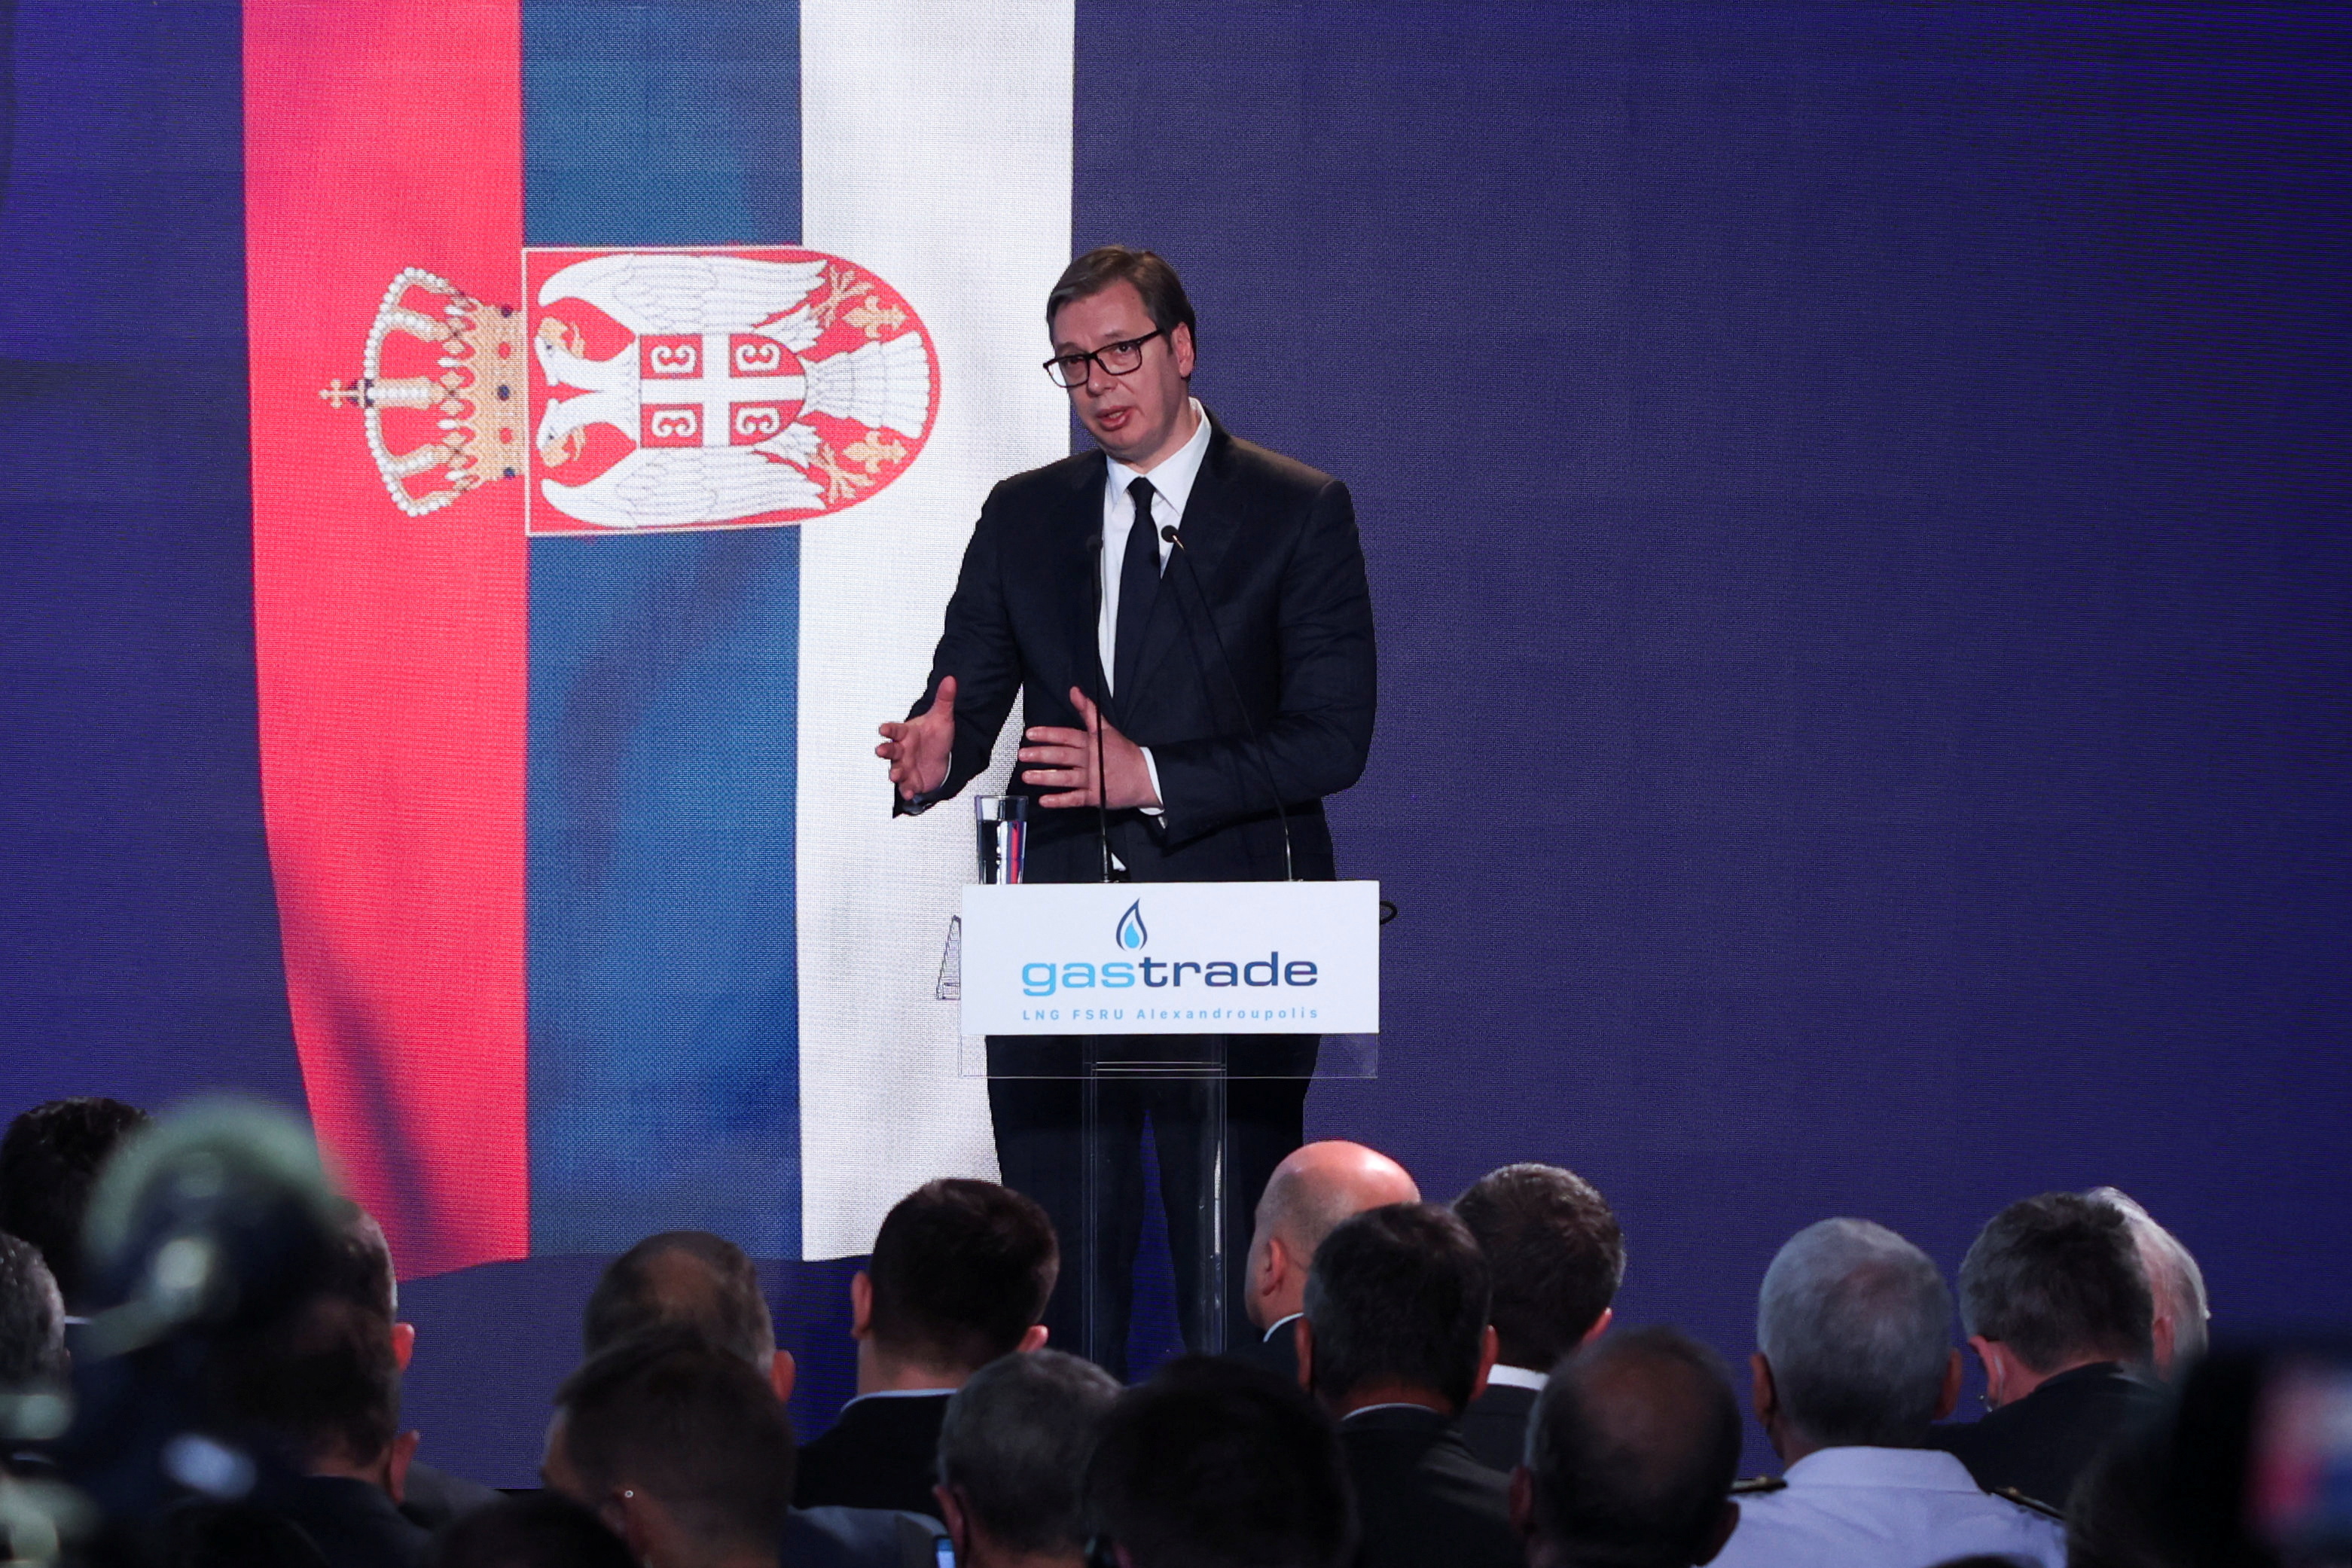 Serbia's President Aleksandar Vucic speaks during an event in Alexandroupolis